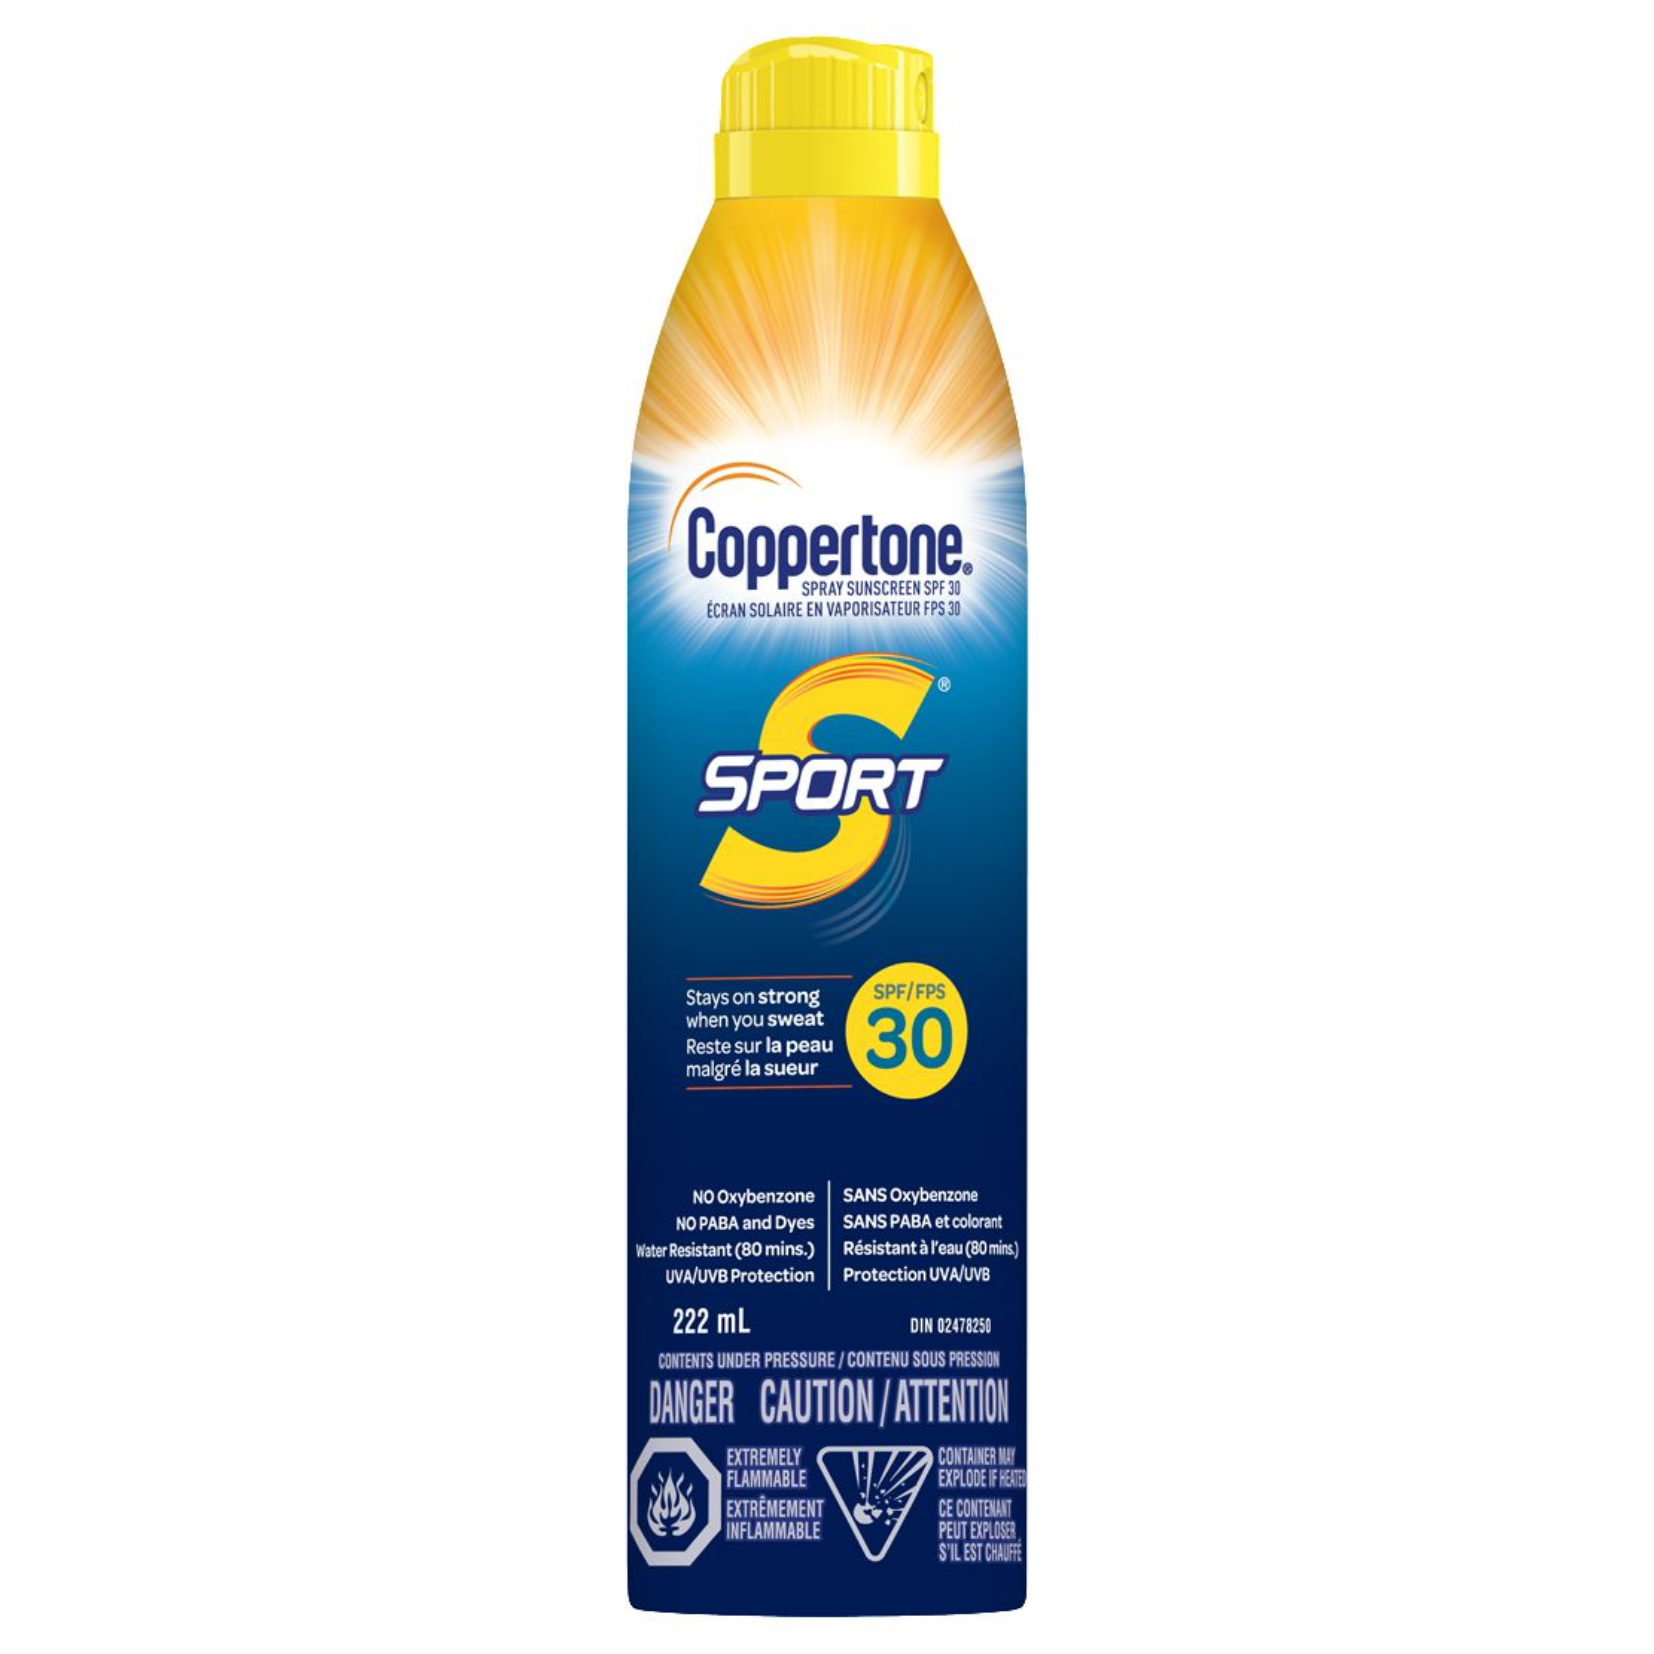 Coppertone Sport SPF 30 Sun Screen Spray 222ml